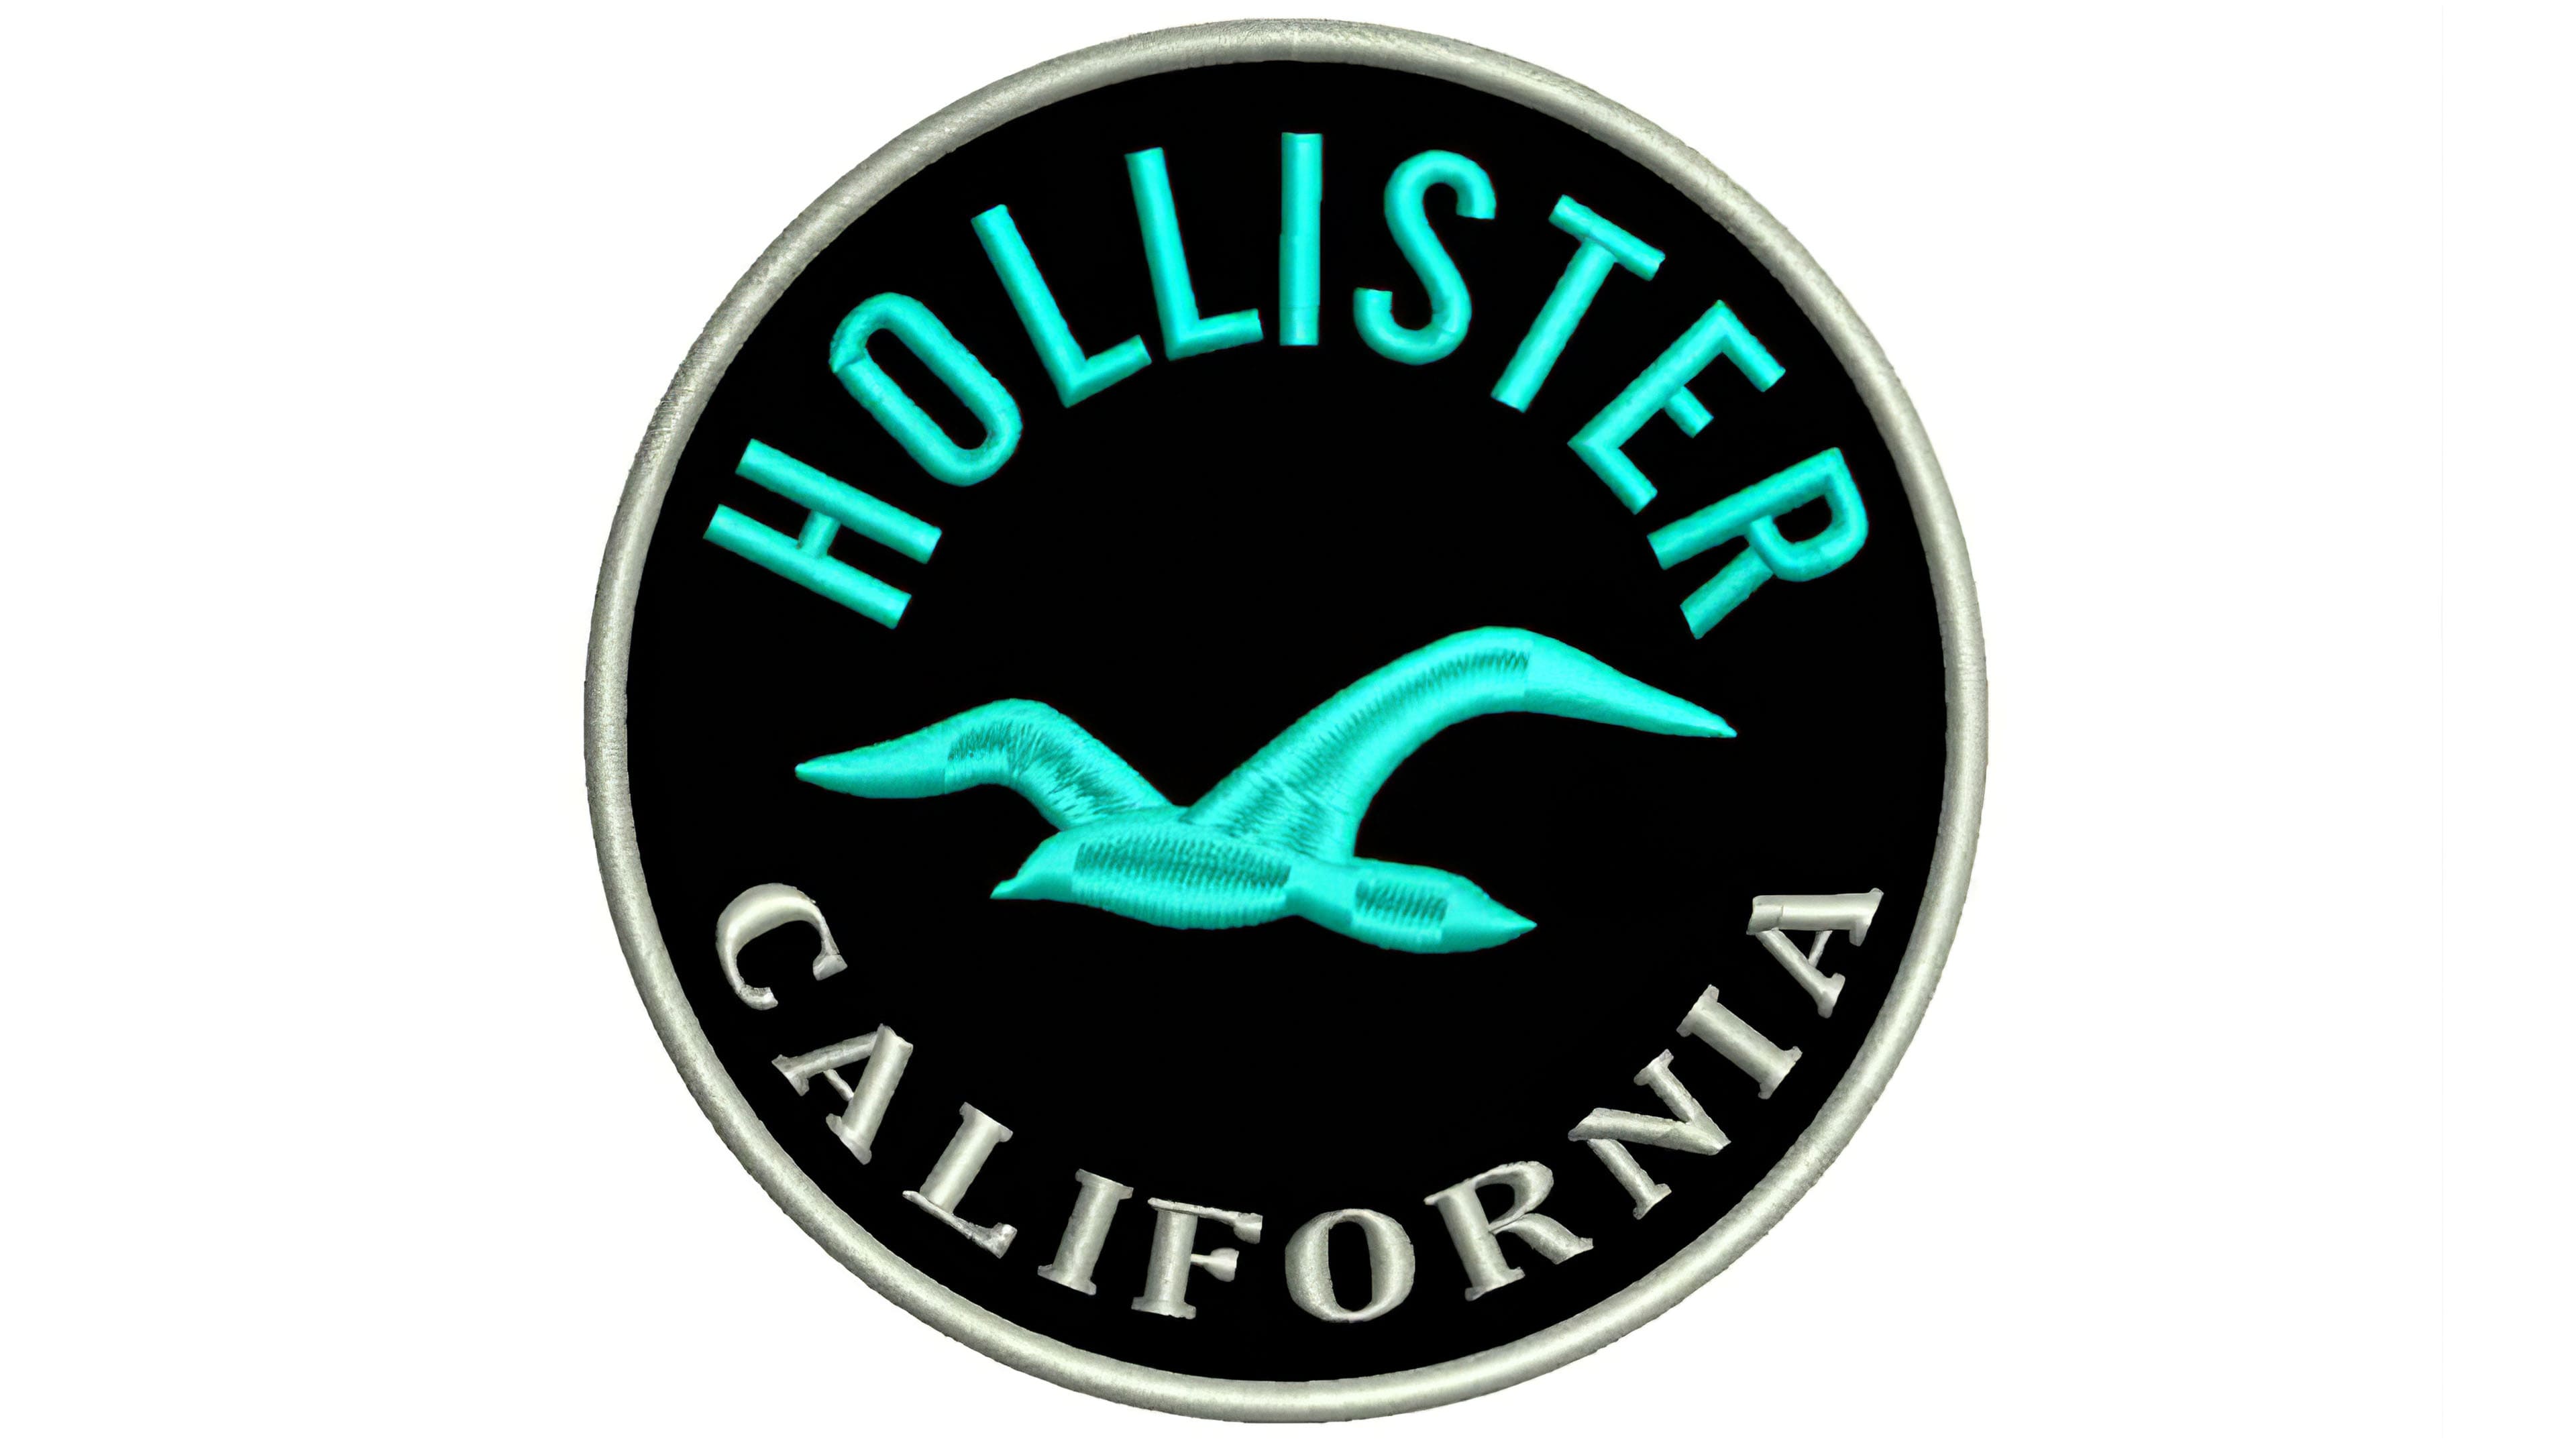 Hollister Logo Significado Del Logotipo, Png, Vector | vlr.eng.br